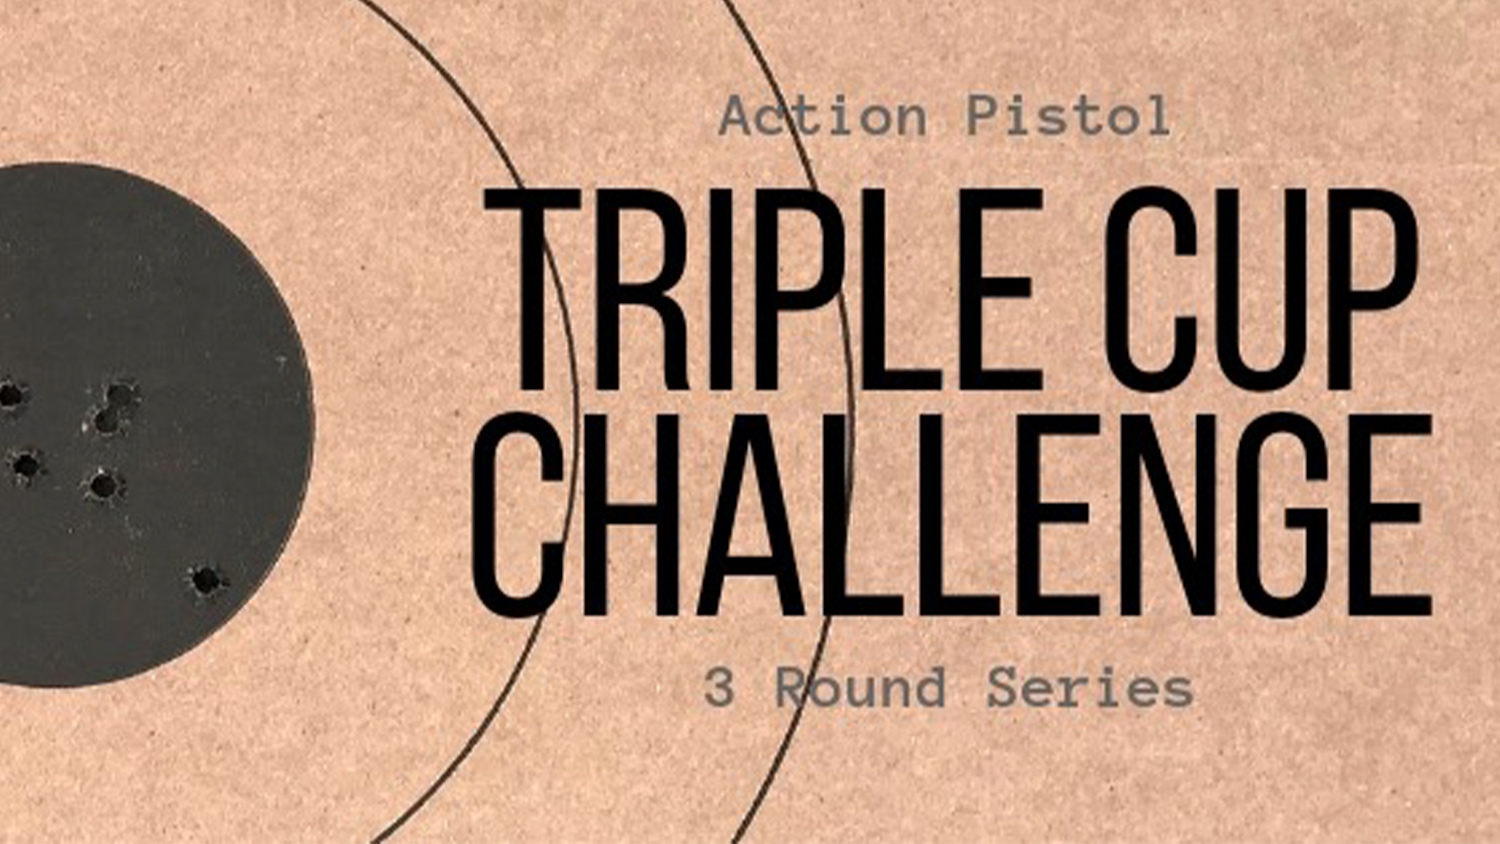 Action Pistol Triple Cup Challenge